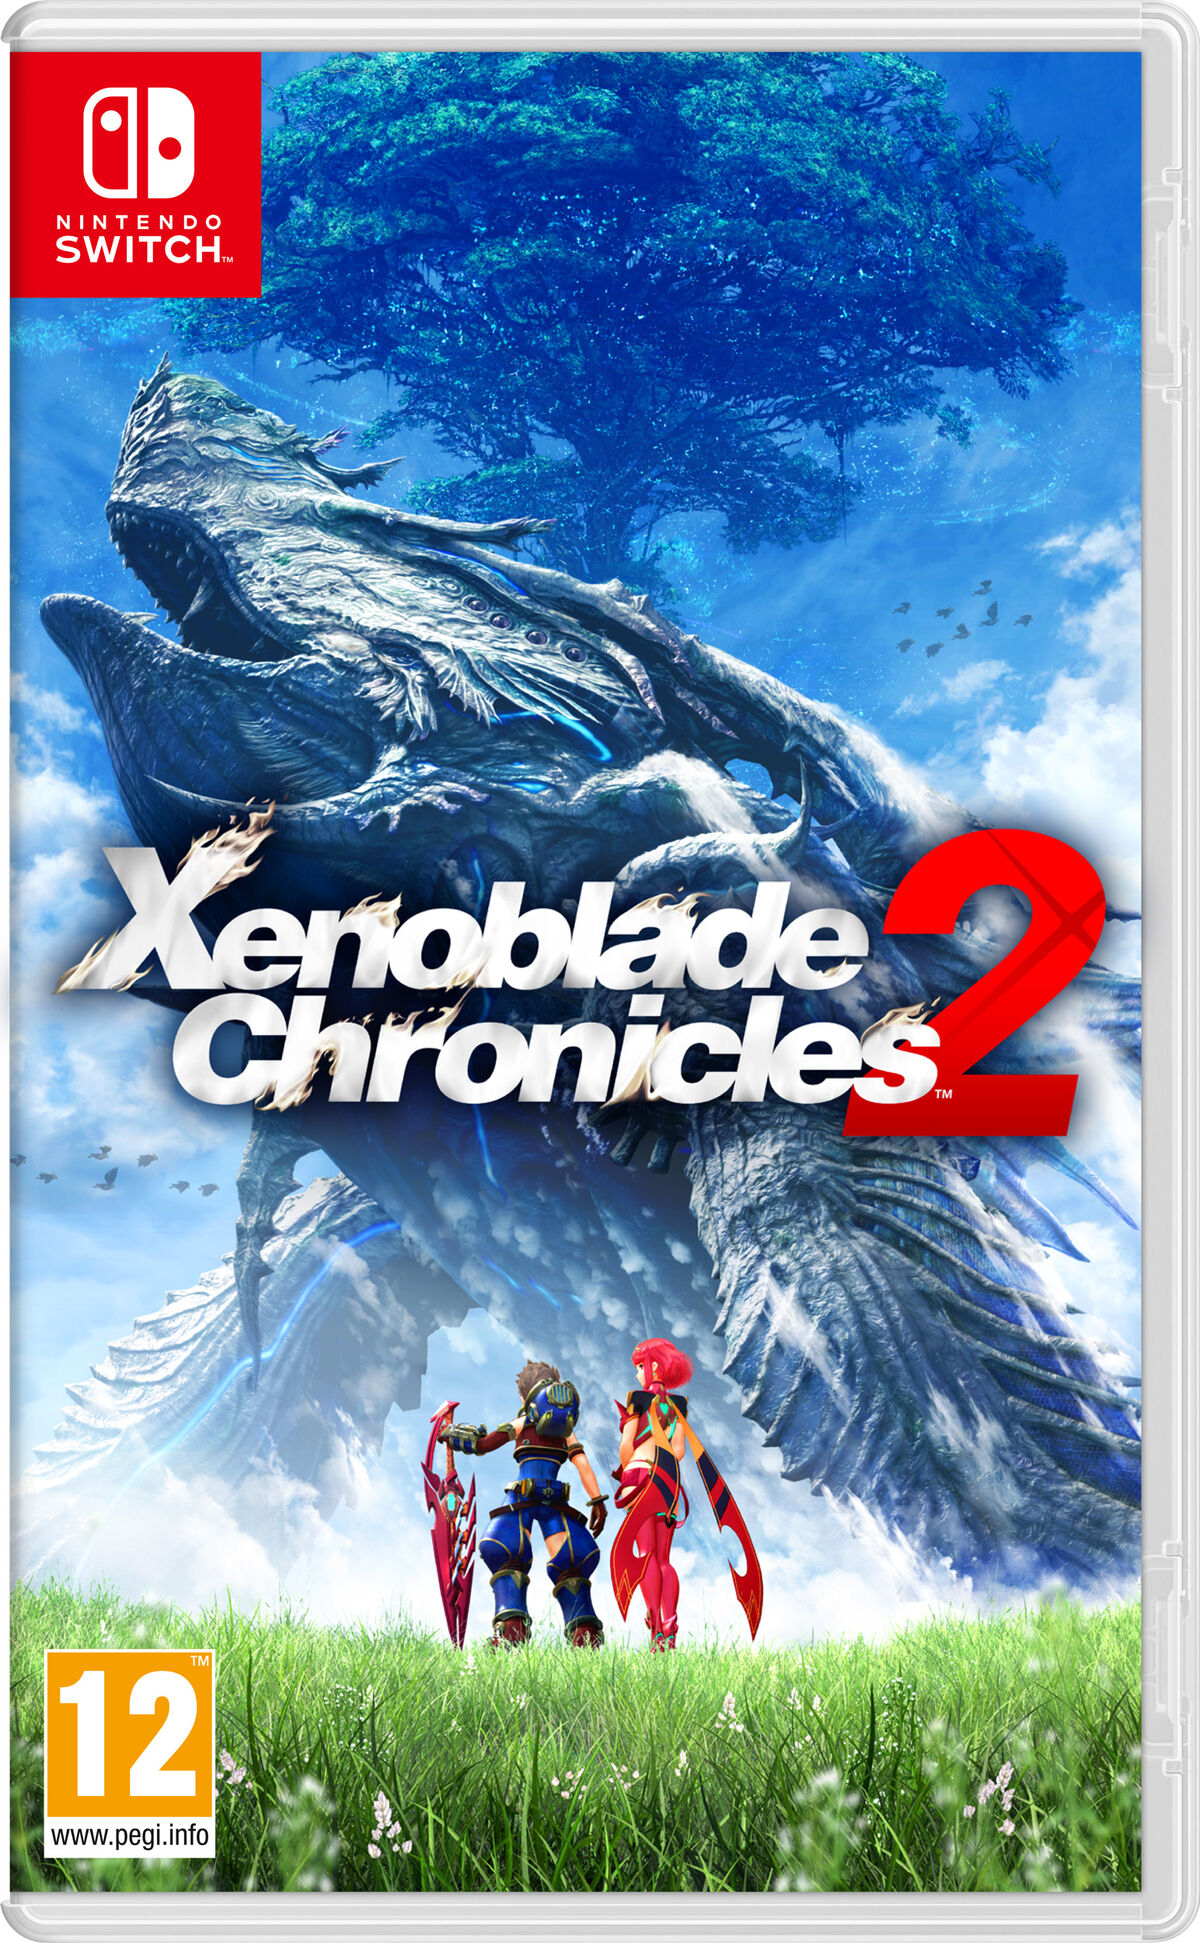 Xenoblade Chronicles (video game) - Wikipedia